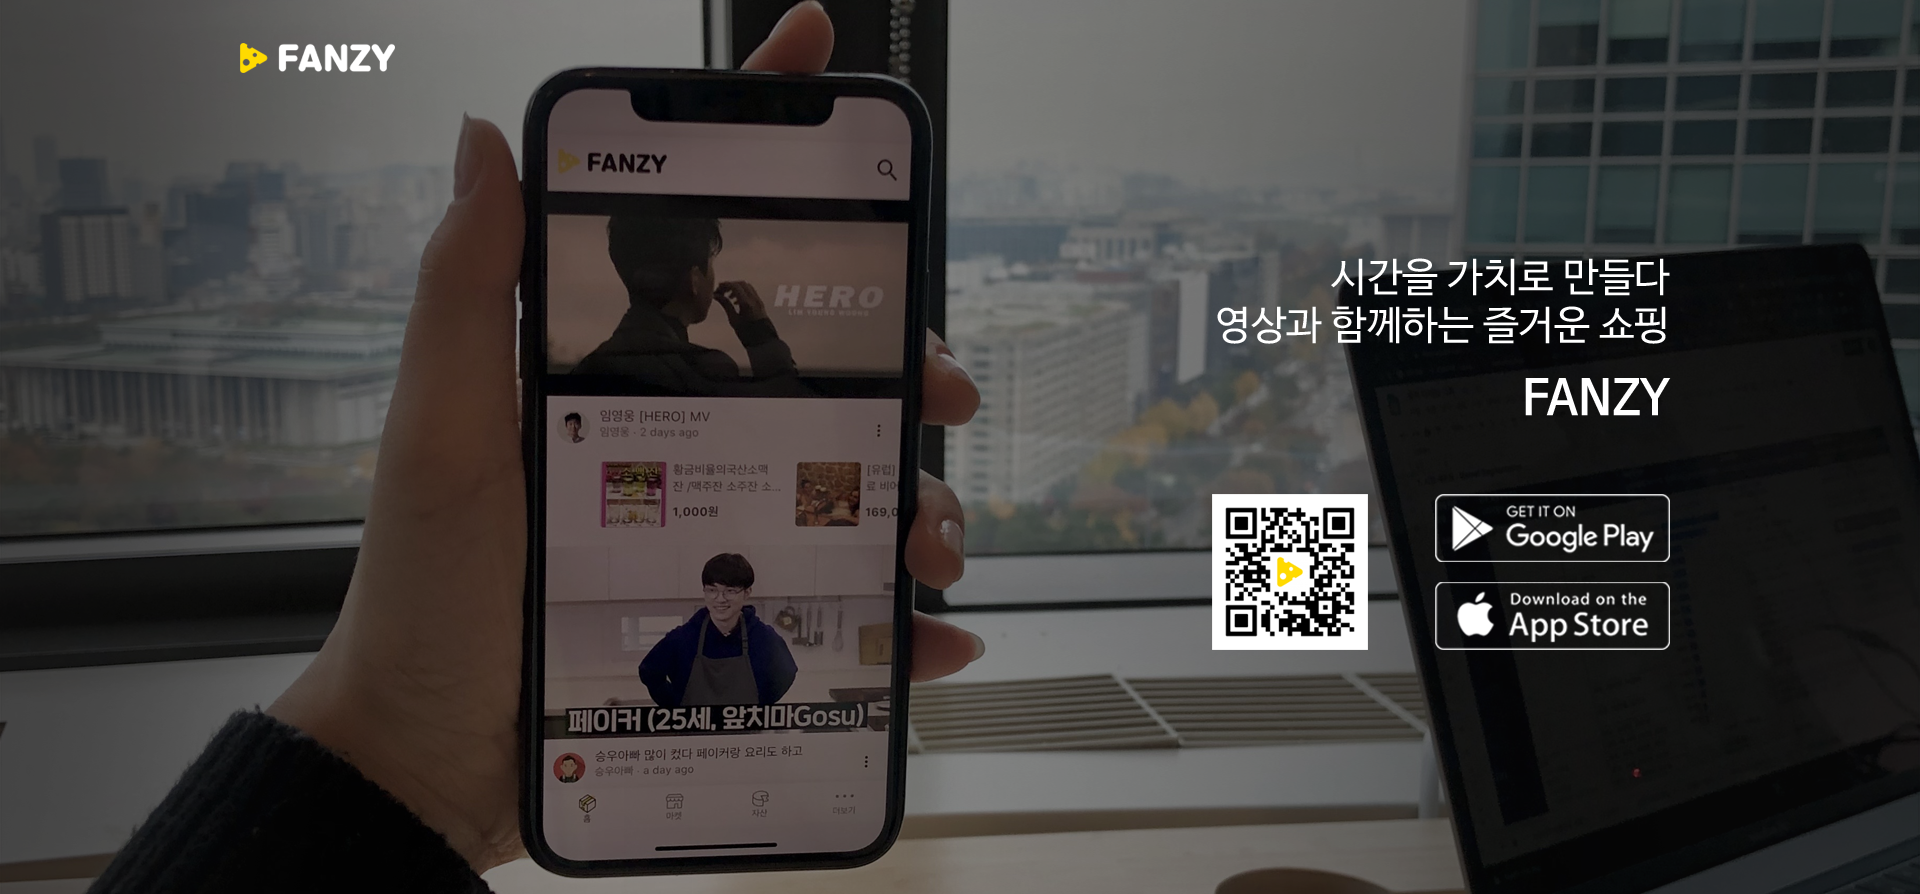 Web_banner_fanzy_ch_-_Kyungho_Kim.png